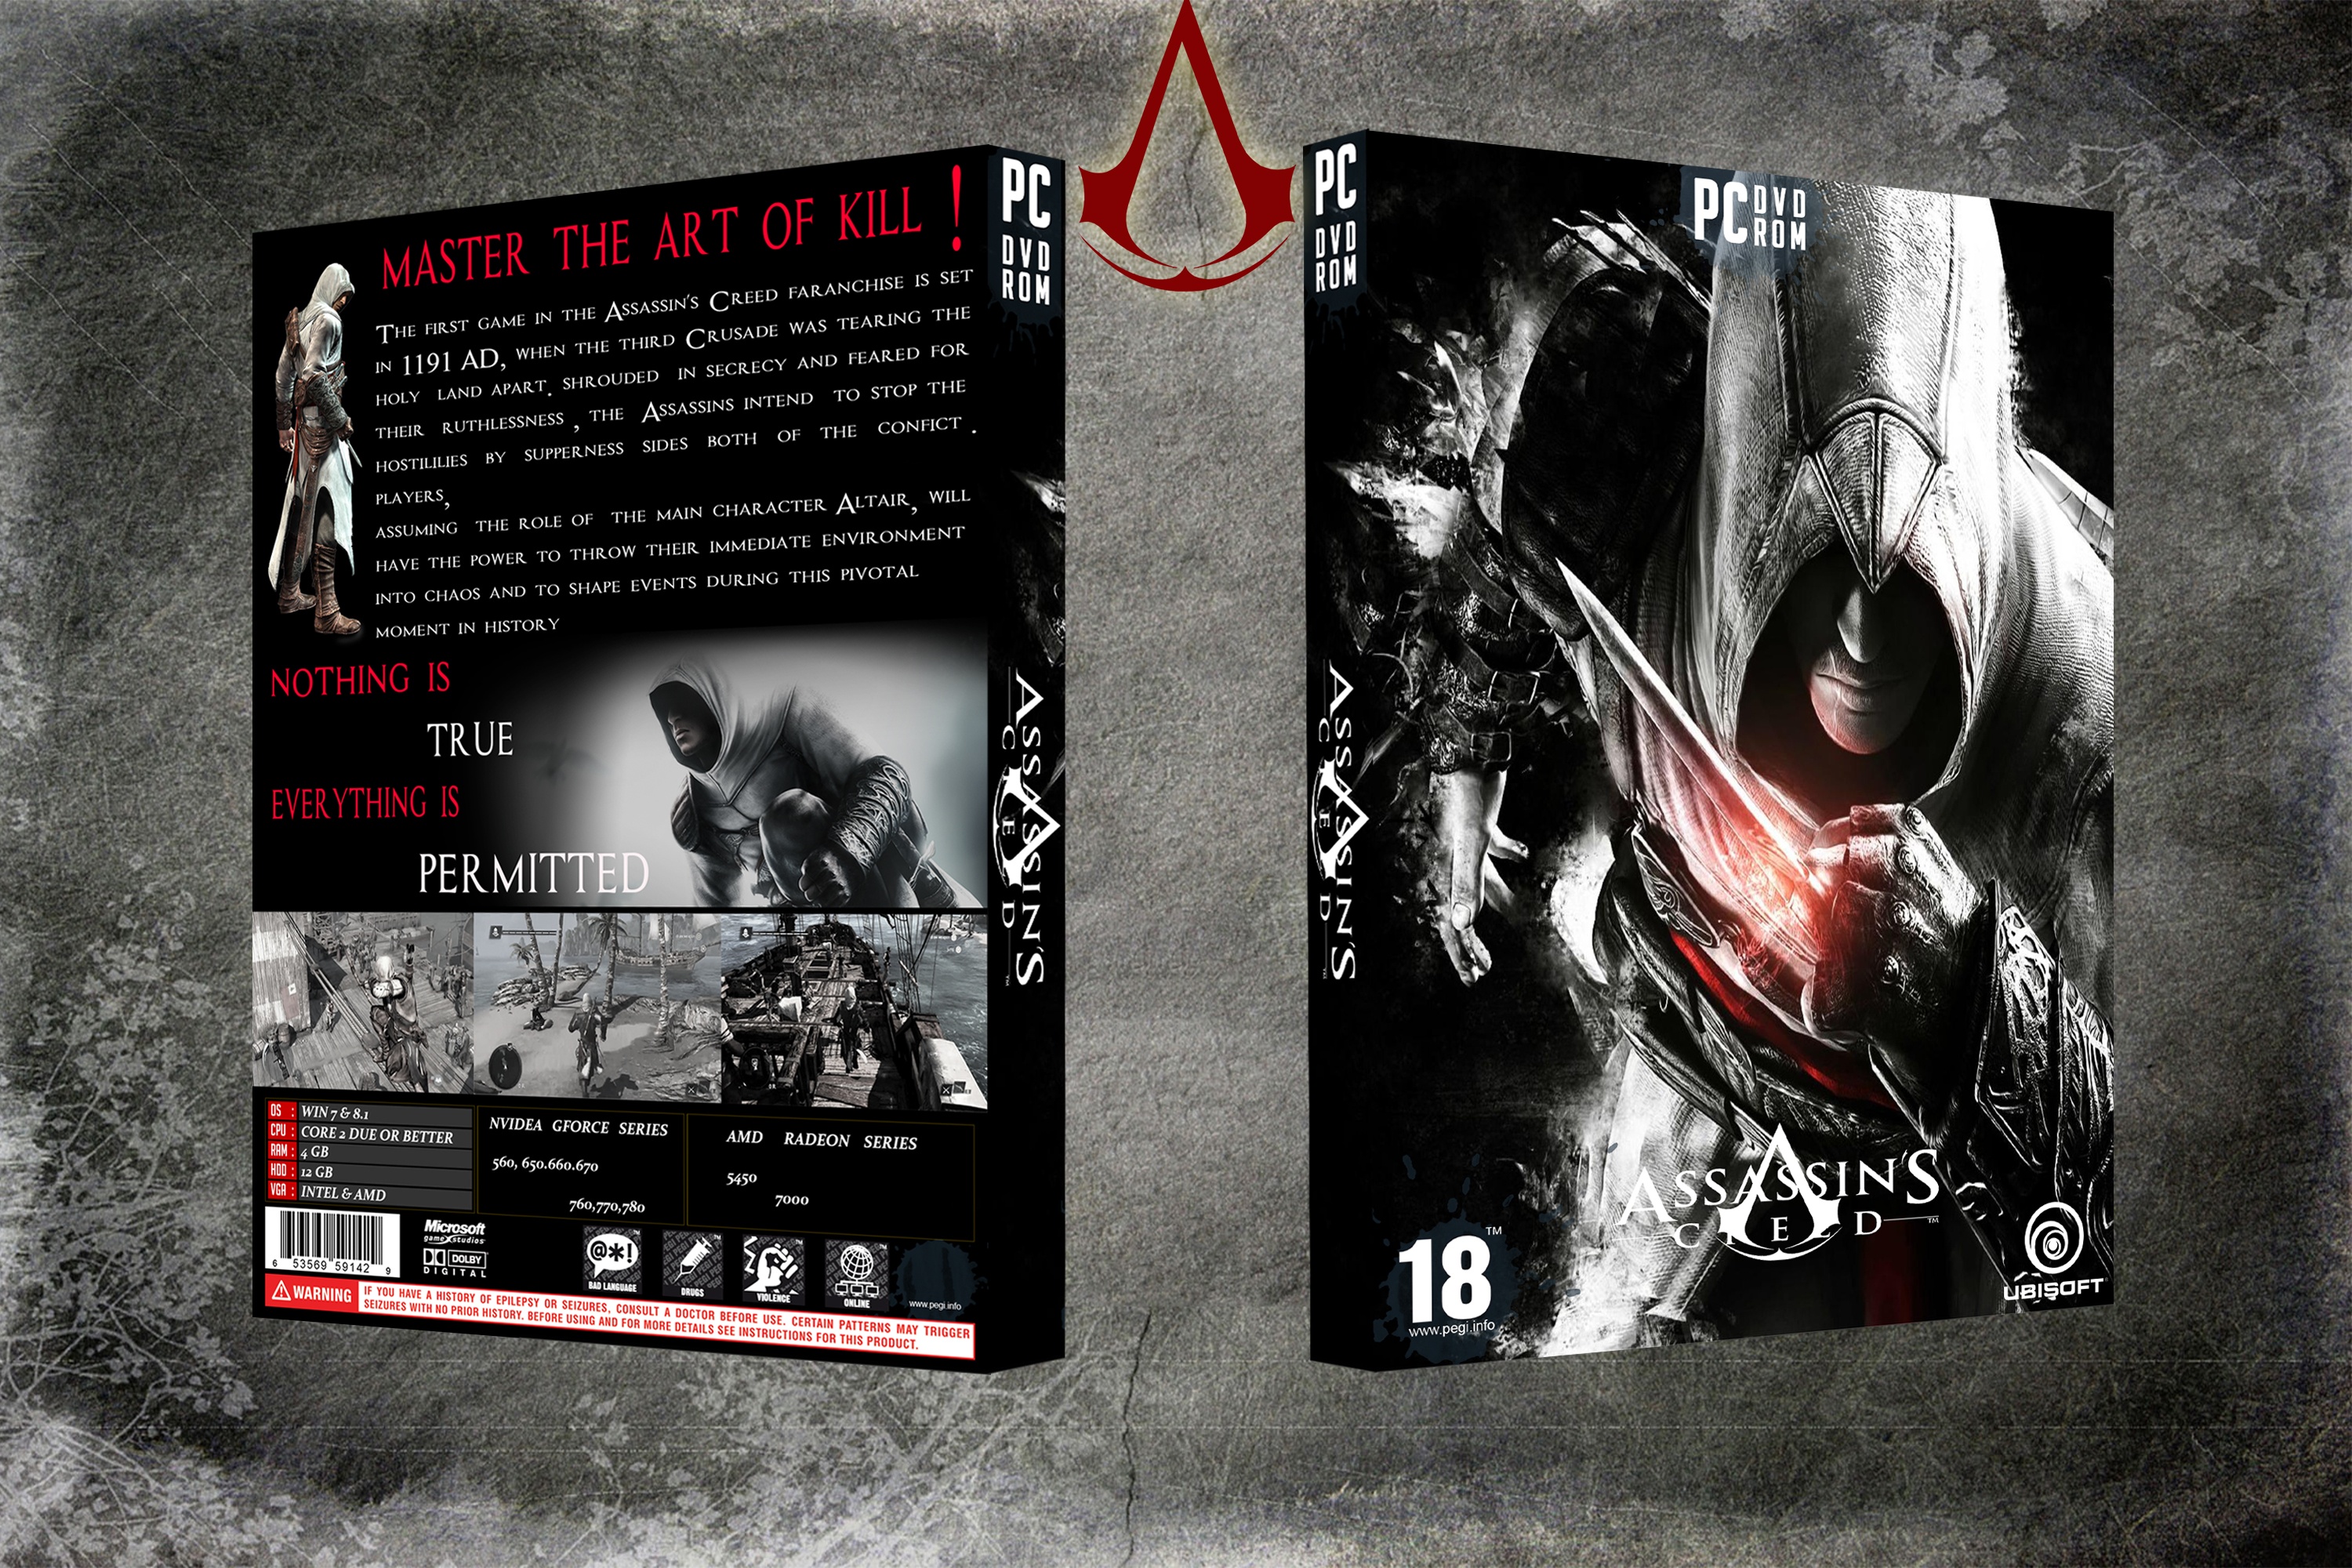 Assassian's Creed box cover